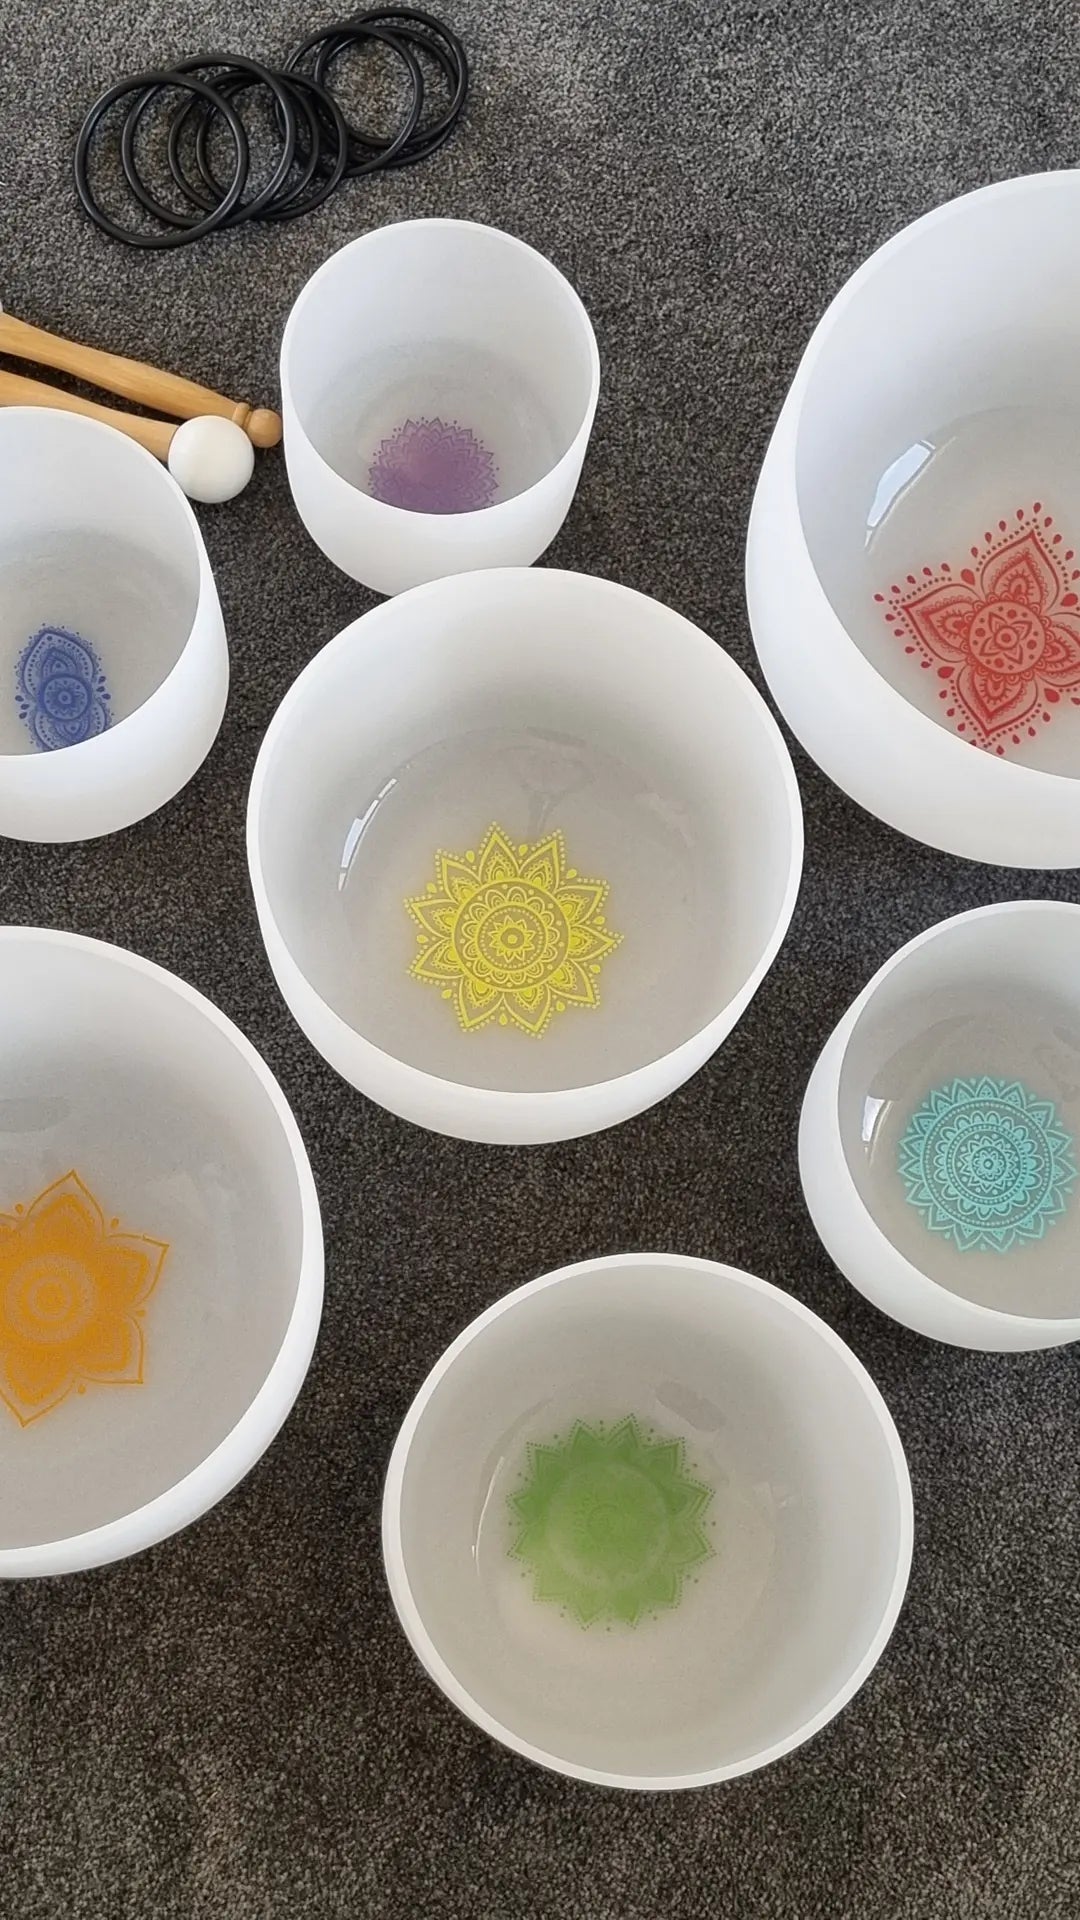 Full Set of 7 White Quartz Crystal Singing Bowls with Symbols